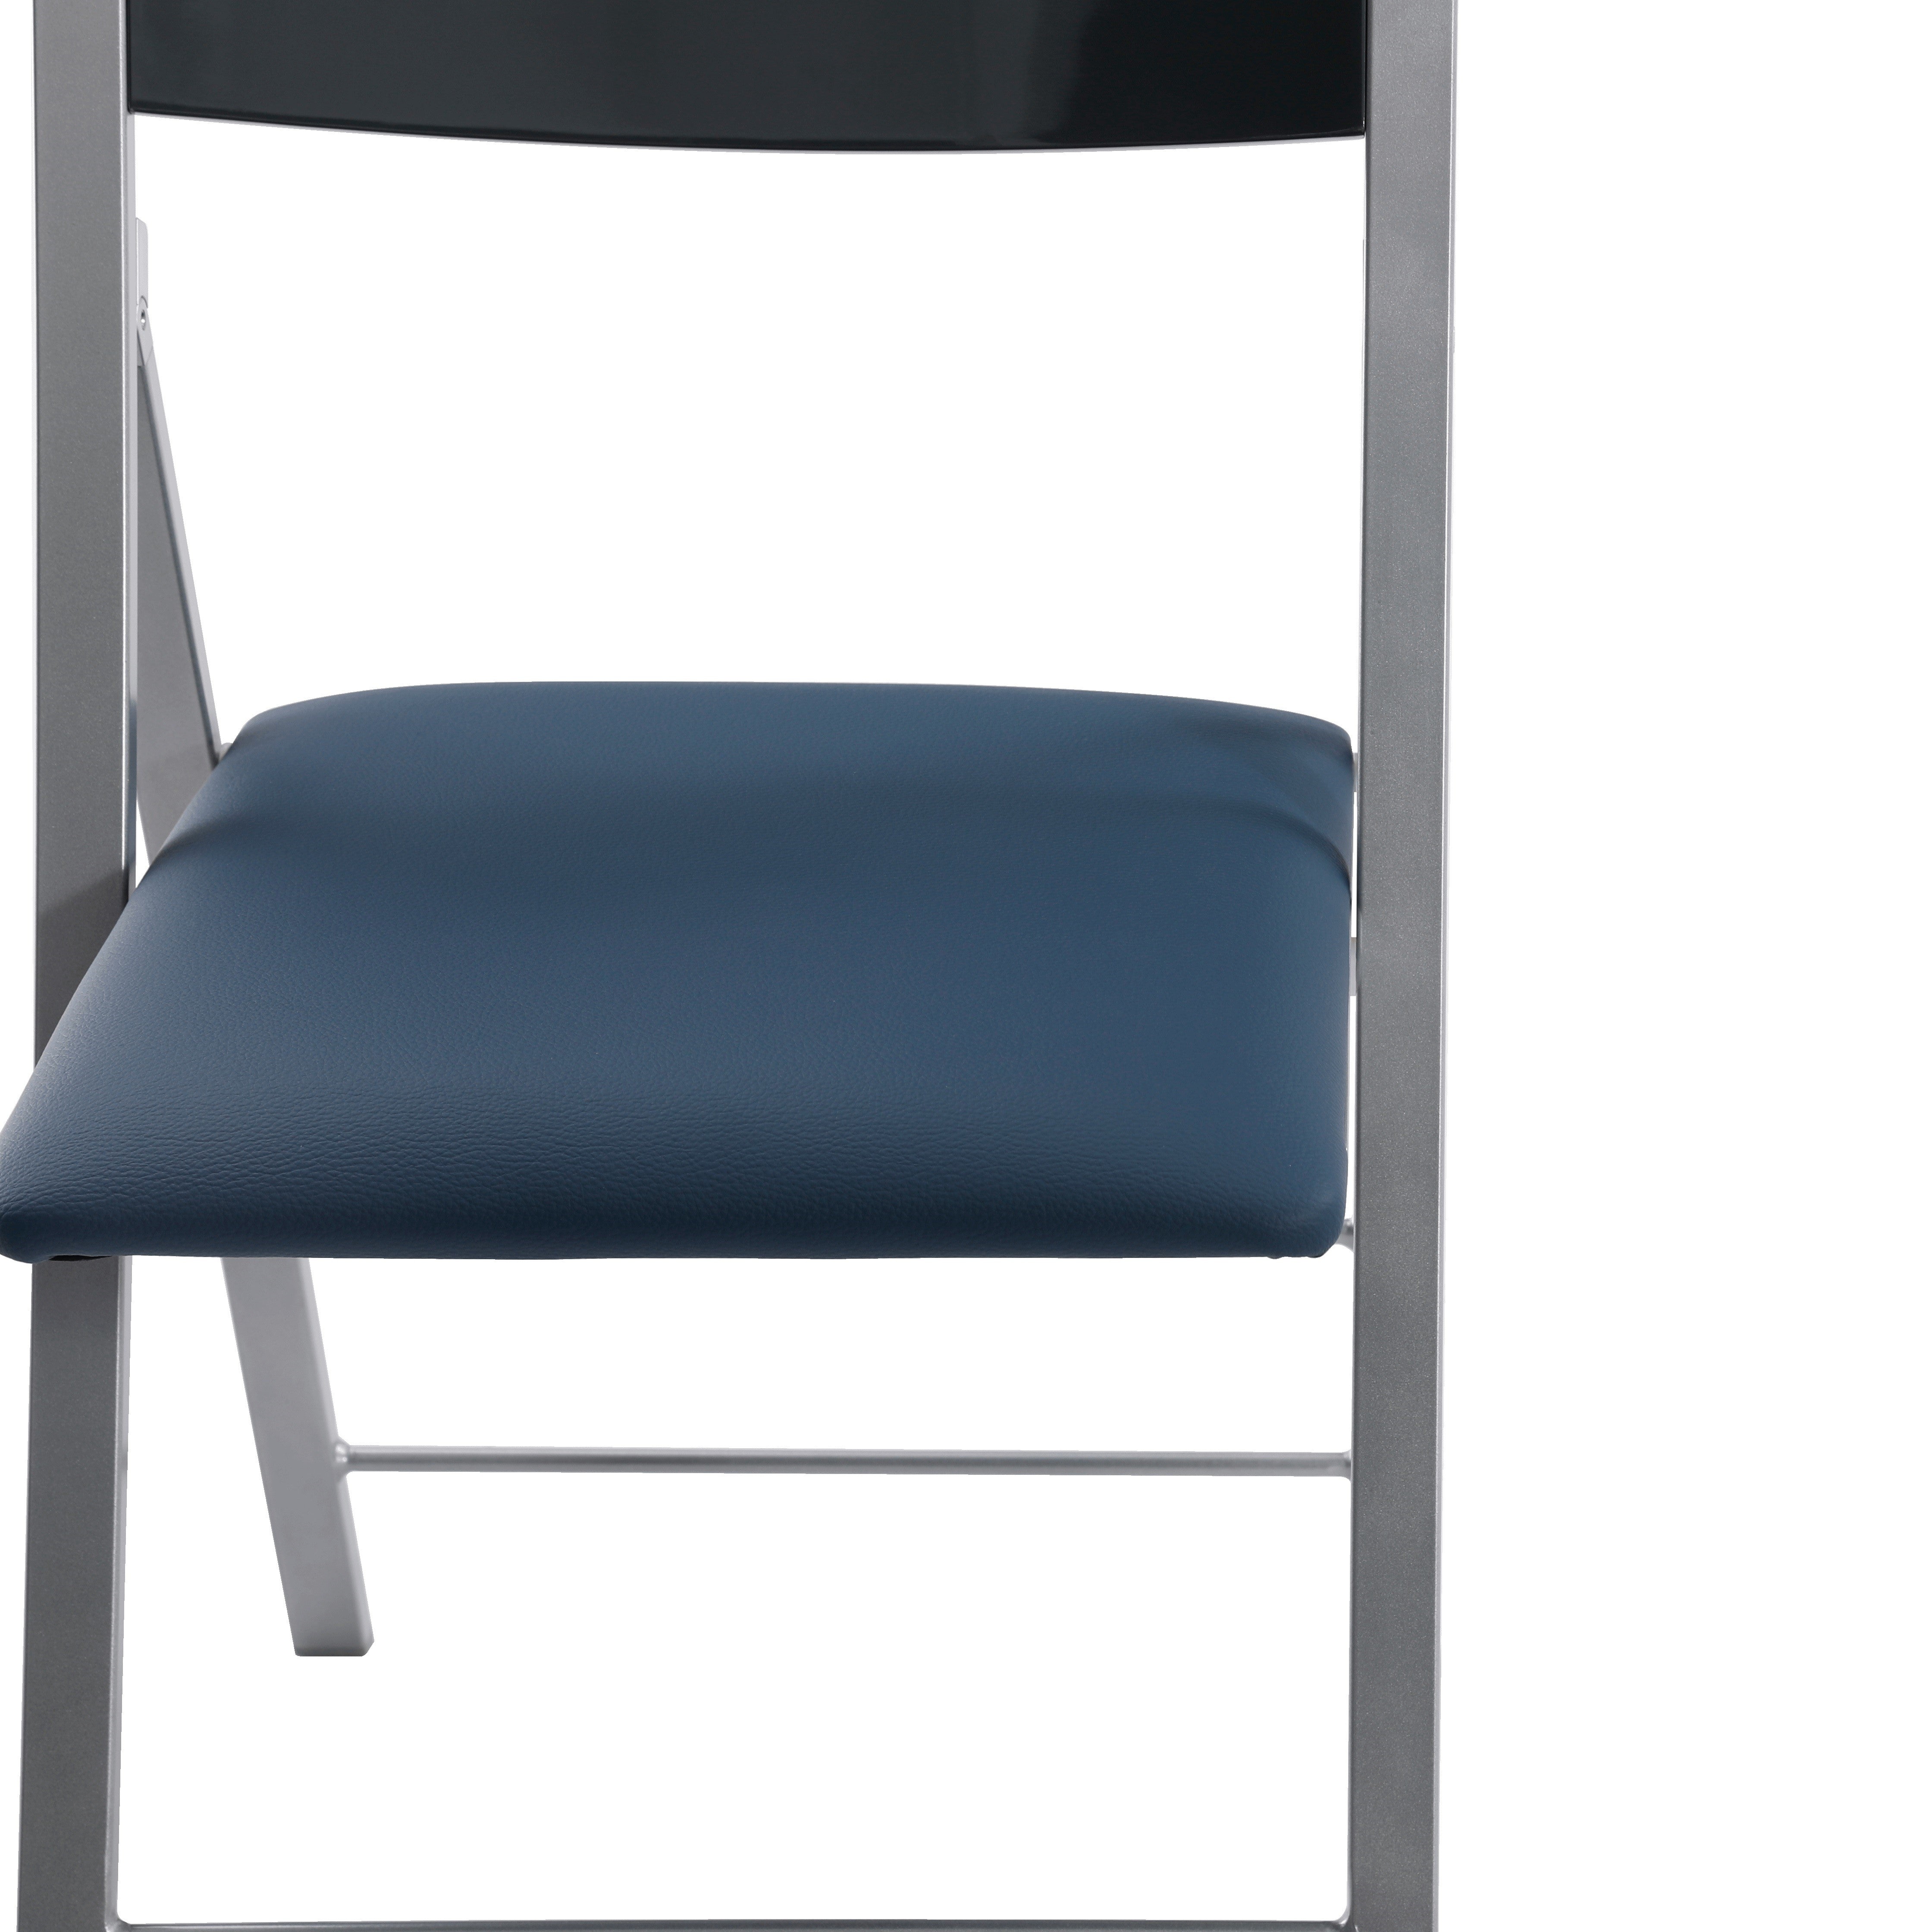 Foldees Chicago model designer high quality folding chair, Silver metal frame, navy blue PU leather padded seat, blue wood rounded backrest,  designer folding chair כסא מתקפל מעוצב מסגרת צבע כסף ומושב דמוי עור כחול נייבי ומשענת גב מעץ כחול